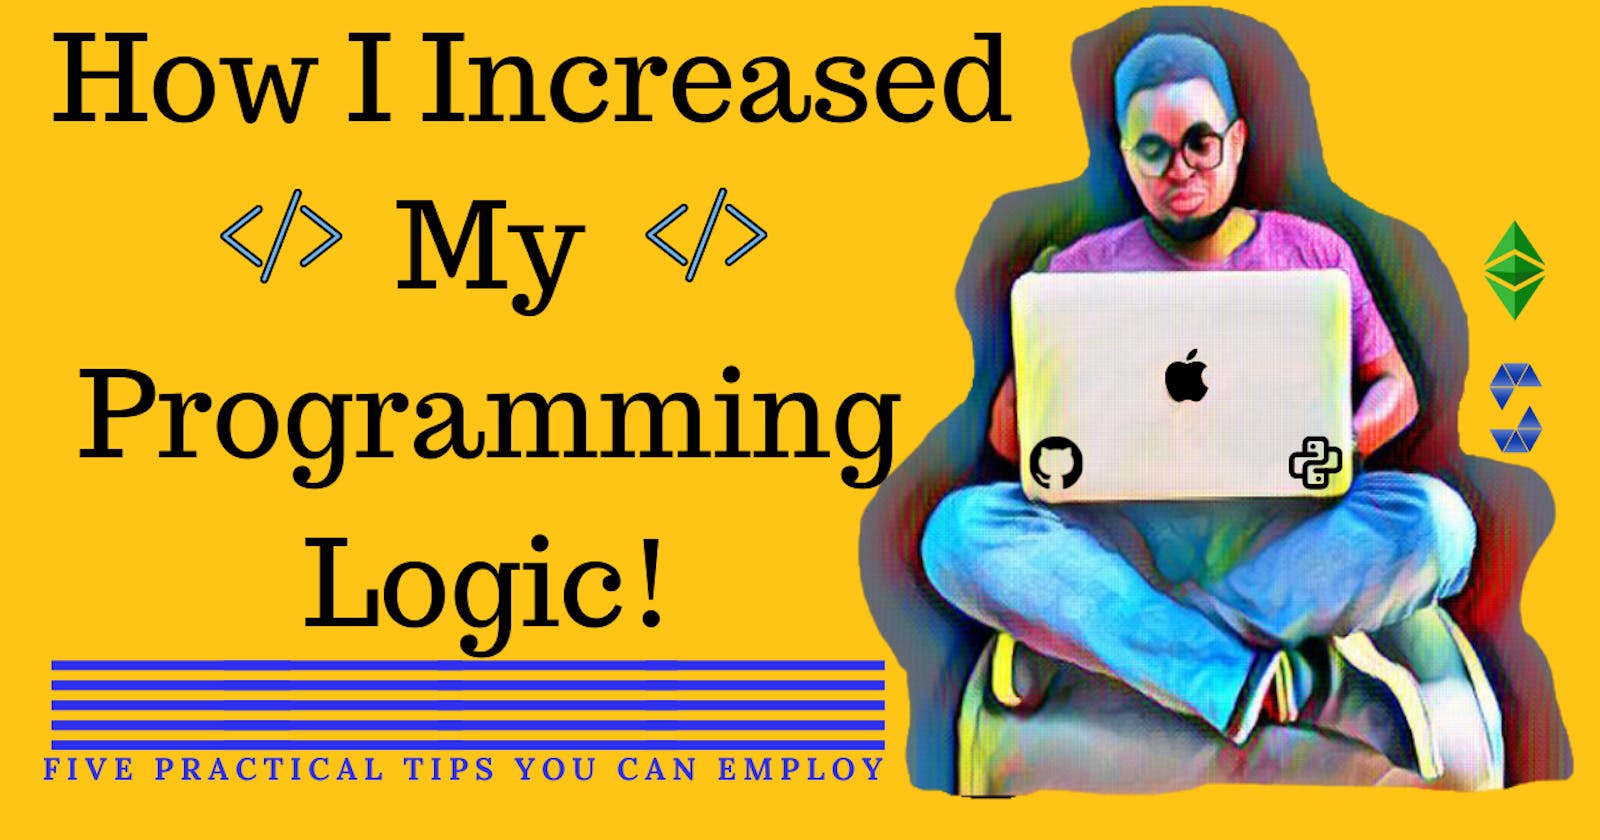 How I Increased My Programming Logic!